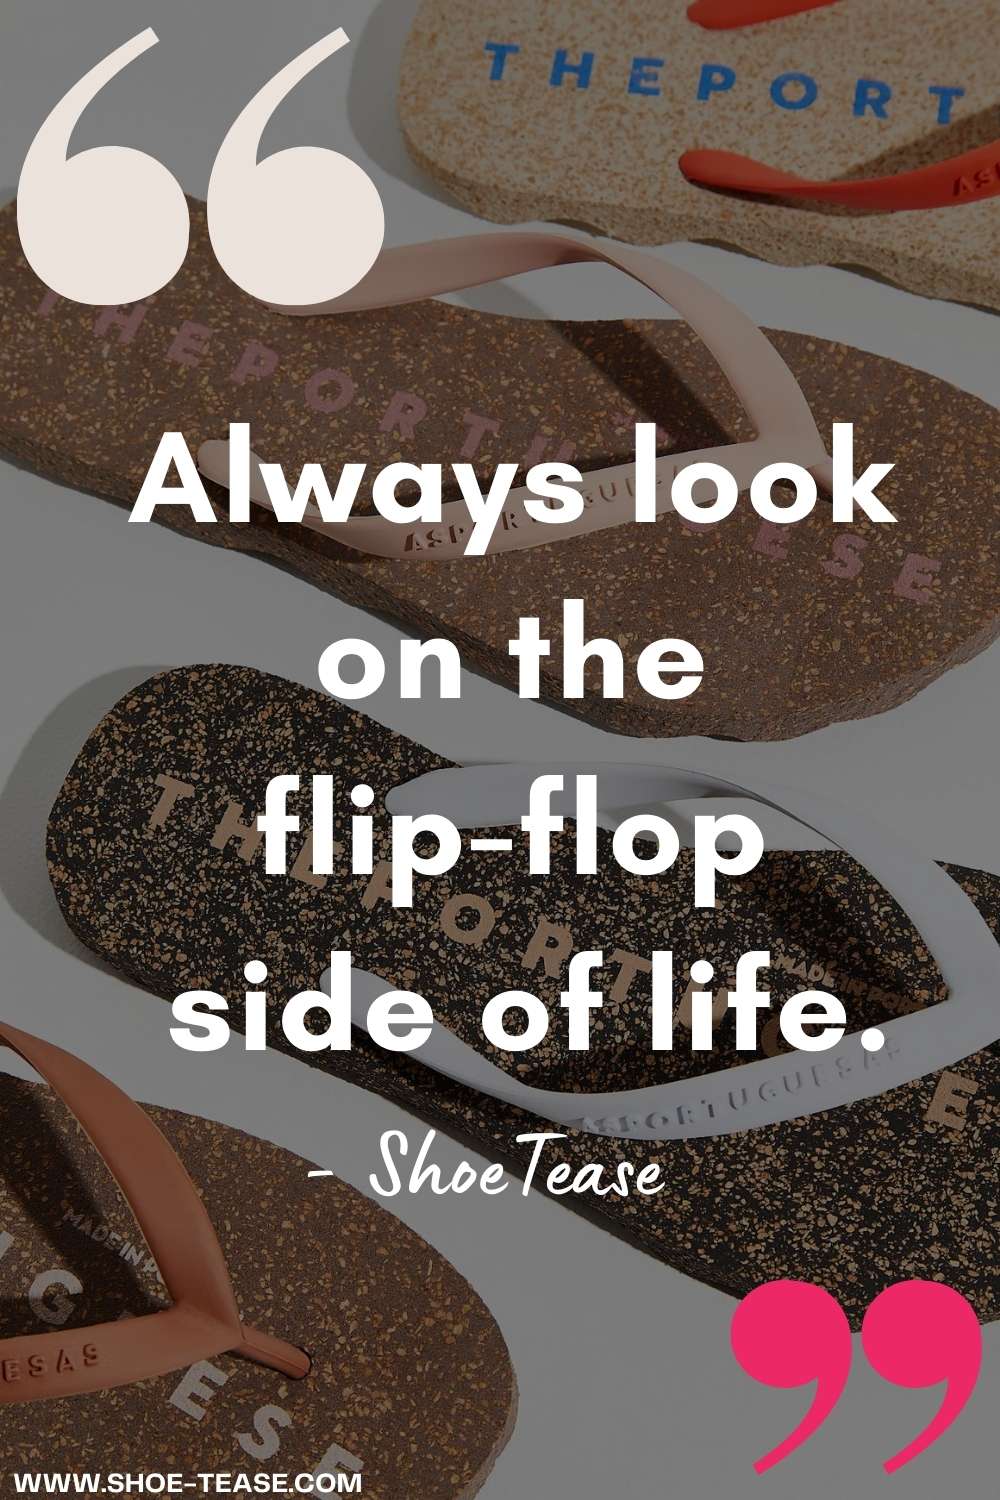 Flip flop quote reading always look on the flip-flop side of life shoetease over image of various flip flops.